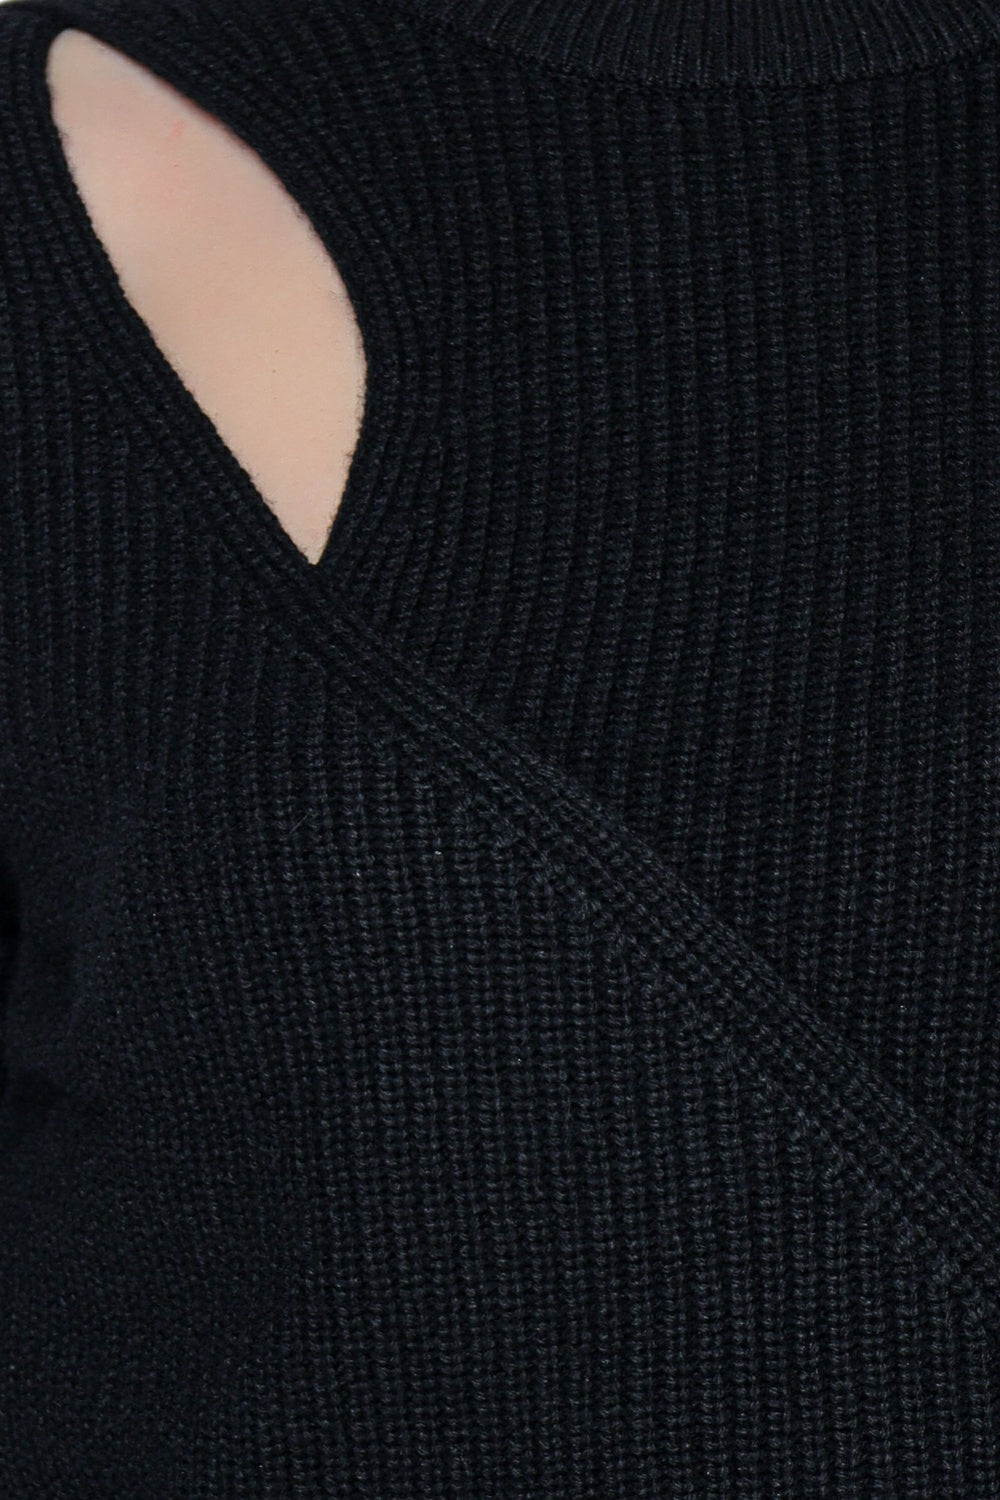 pulover negru - detaliu decupat